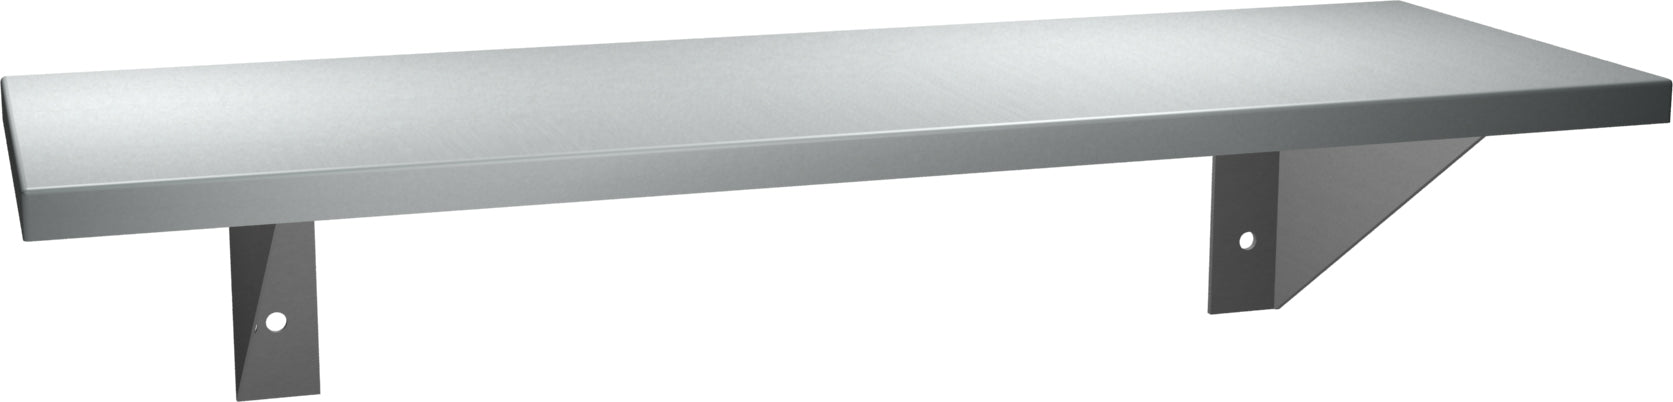 ASI 0692-848 Shelf, Stainless Steel, 8 X 48 Inch